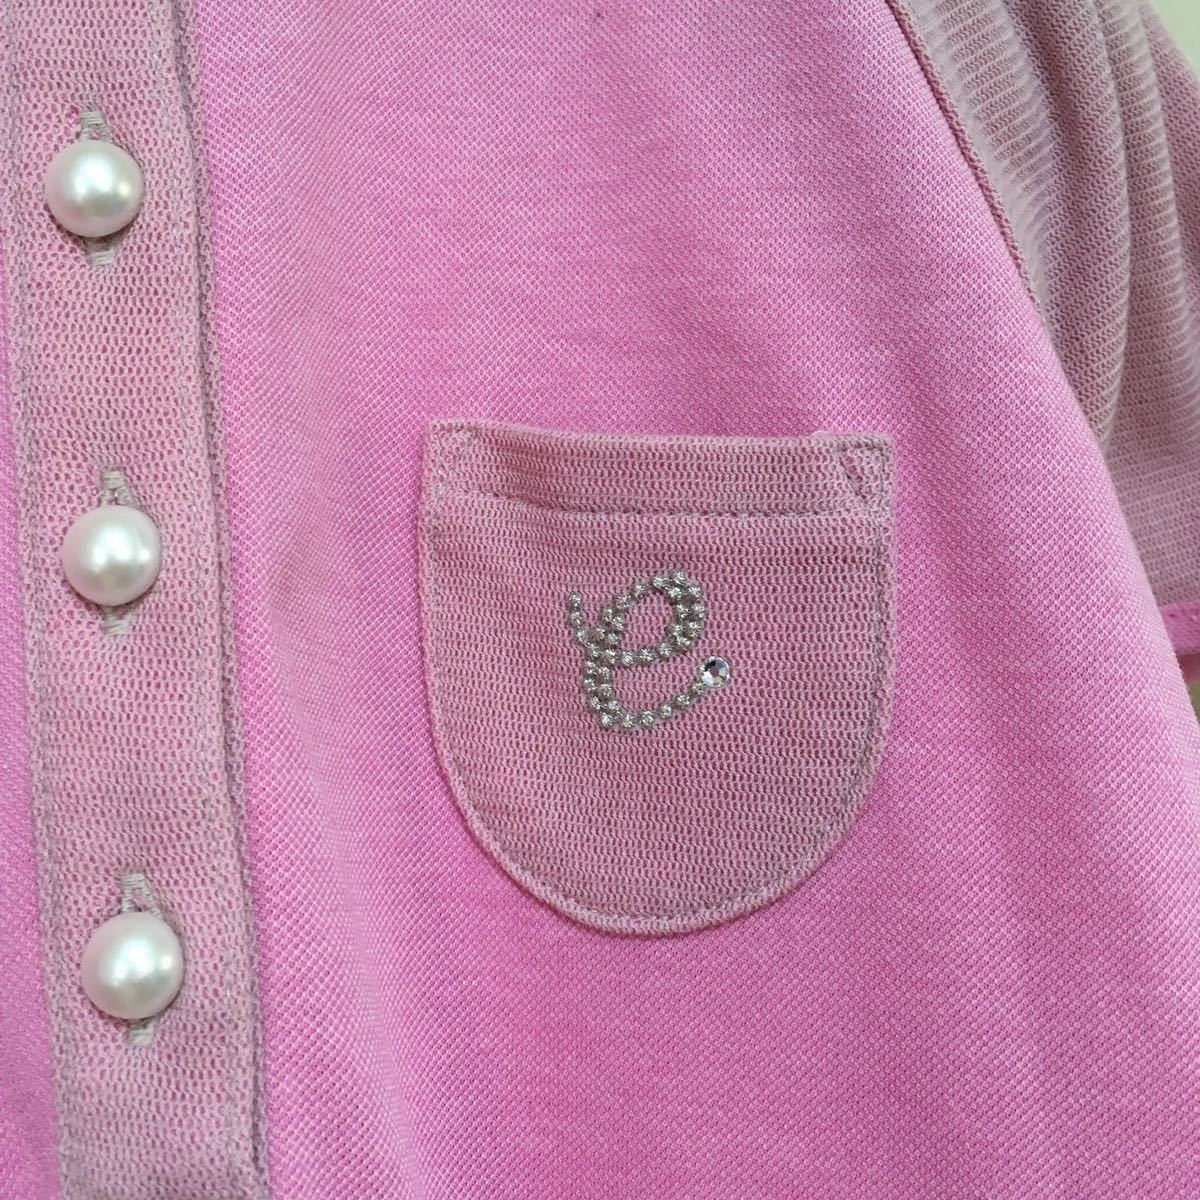 【efficace】エフィカス チュール袖 半袖ポロシャツ ゴルフウェア サイズ2/M相当 ピンク レディース トップス パールボタン 日本製_画像4